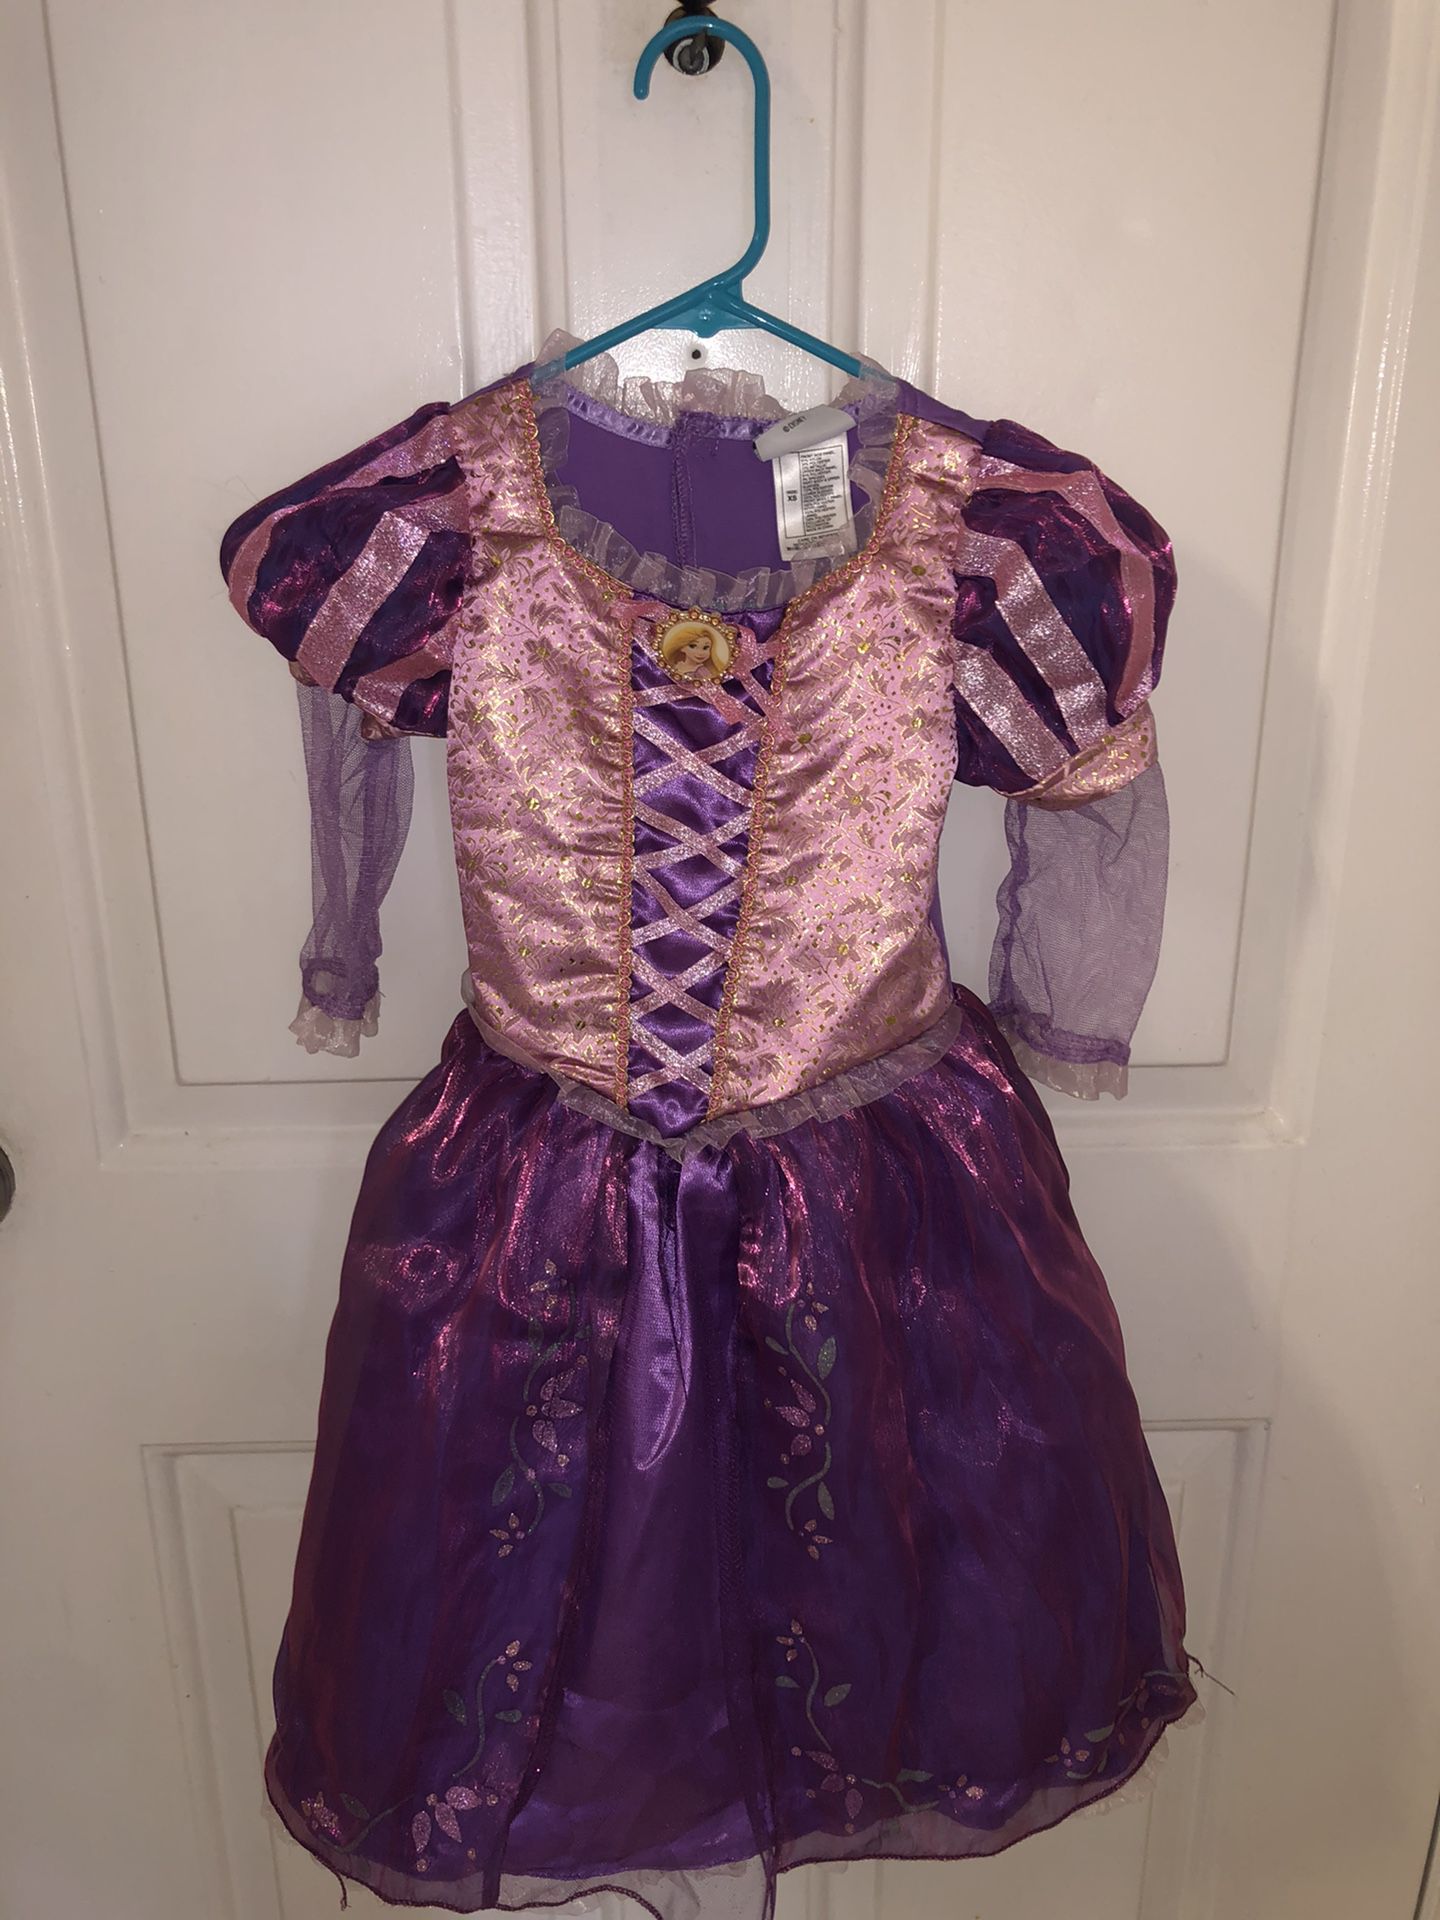 Disney rapunzel costume